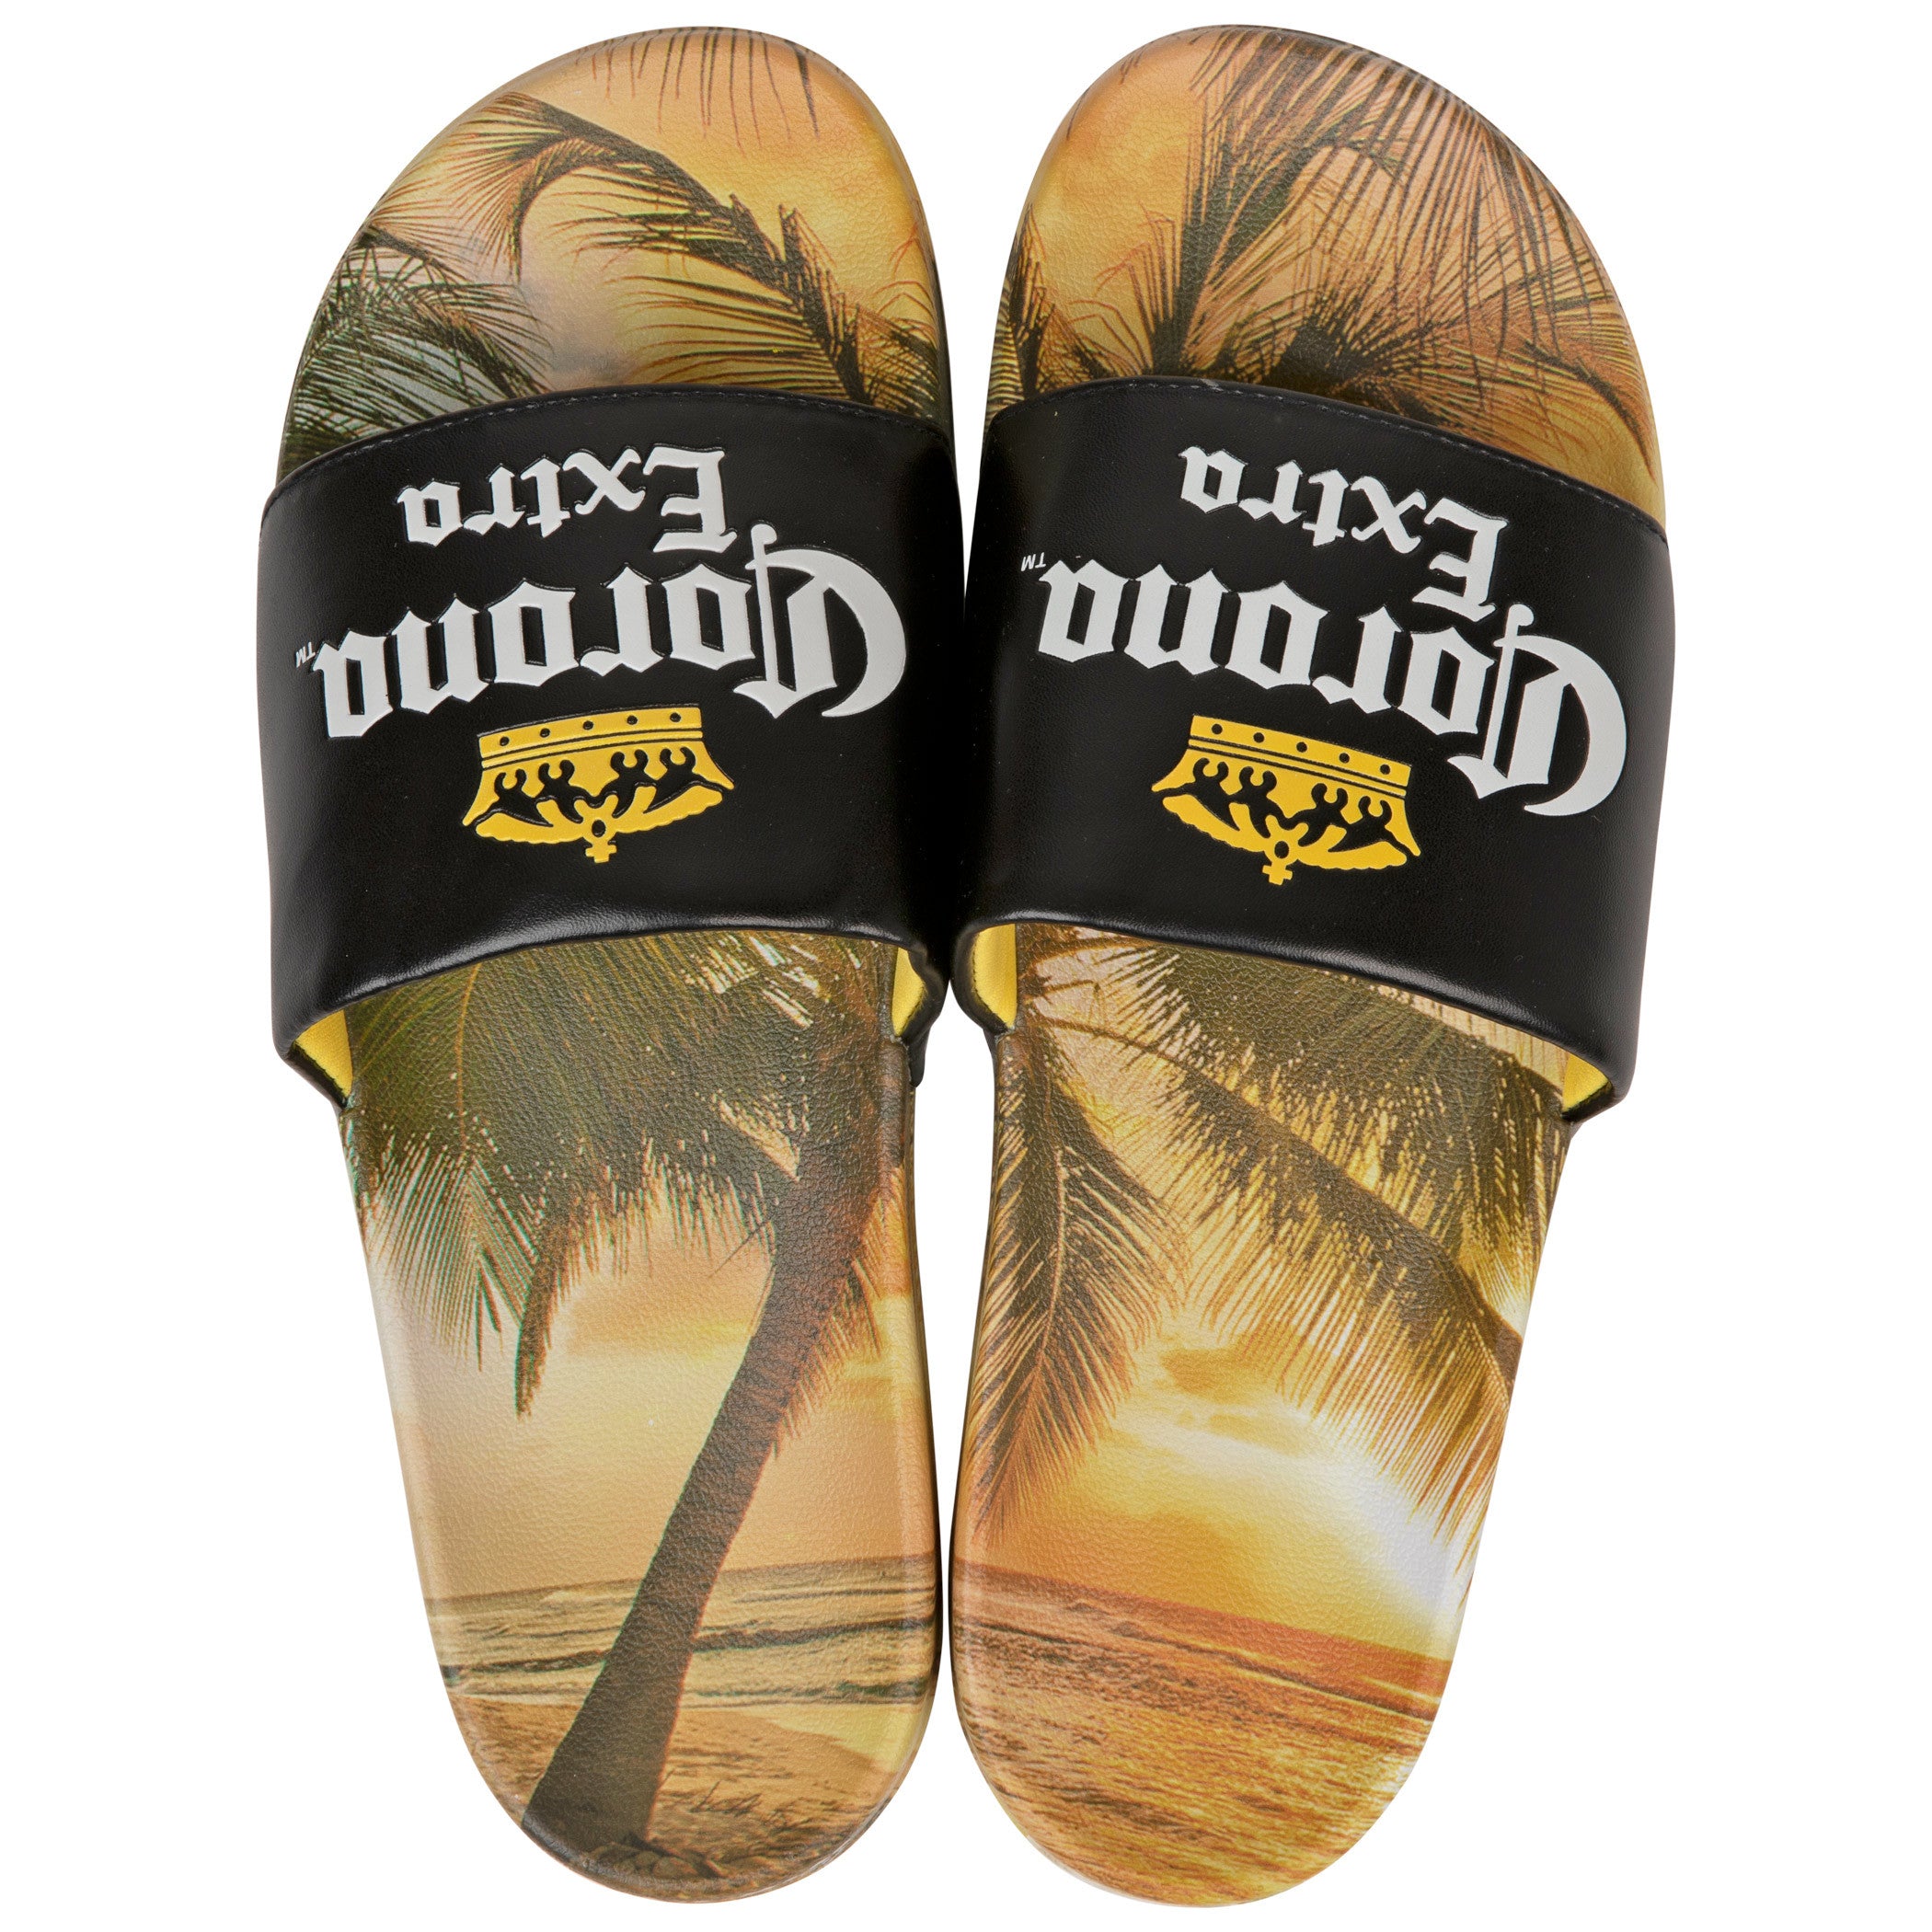 title:Corona Extra Black Label with Beach Scene Sandal Slides;color:Multi-Color